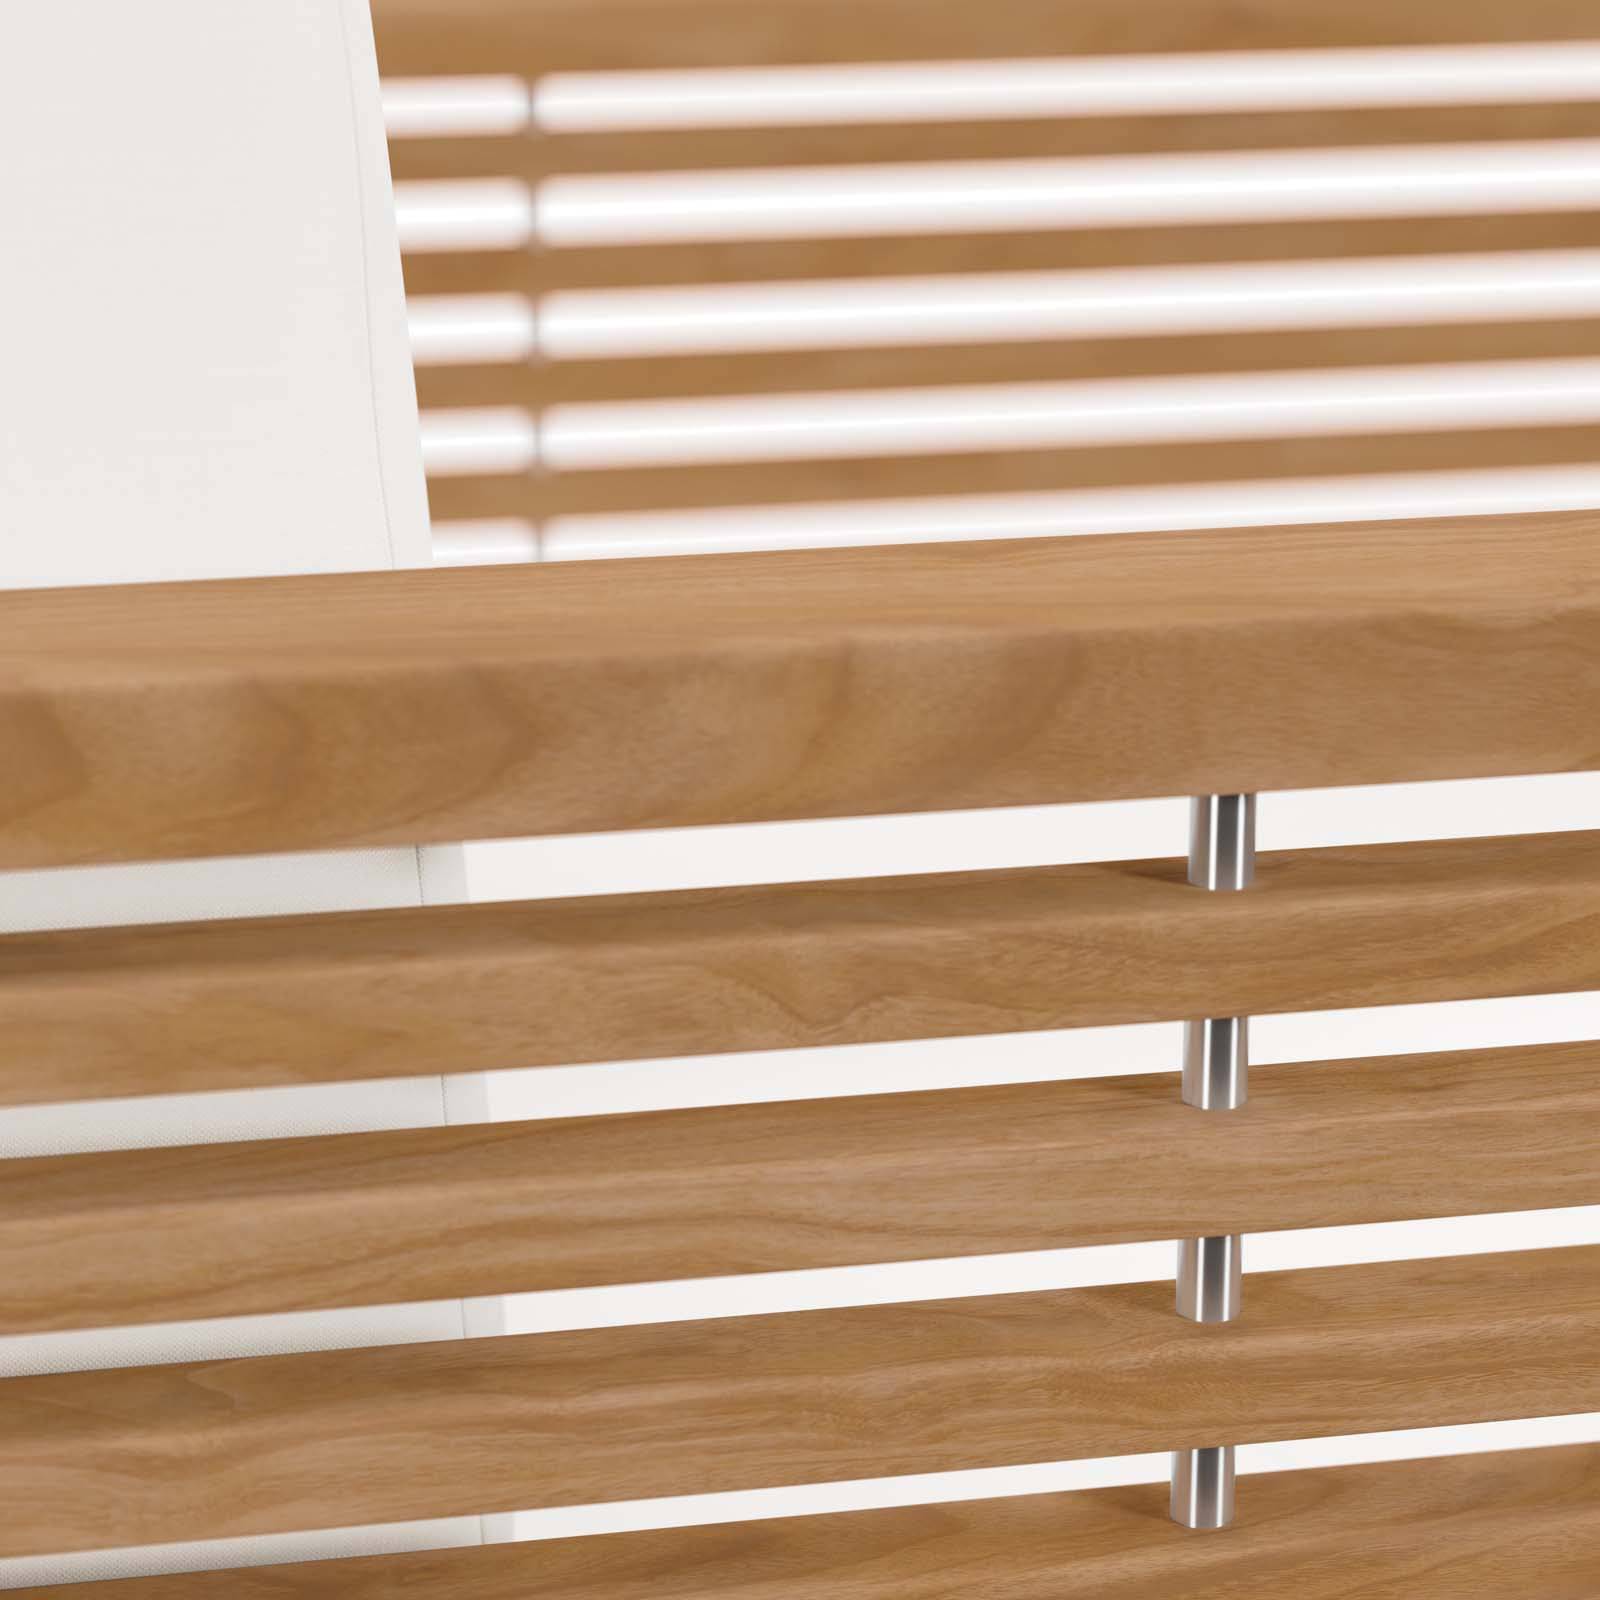 Carlsbad 6-Piece Teak Wood Outdoor Patio Set - Elite Maison